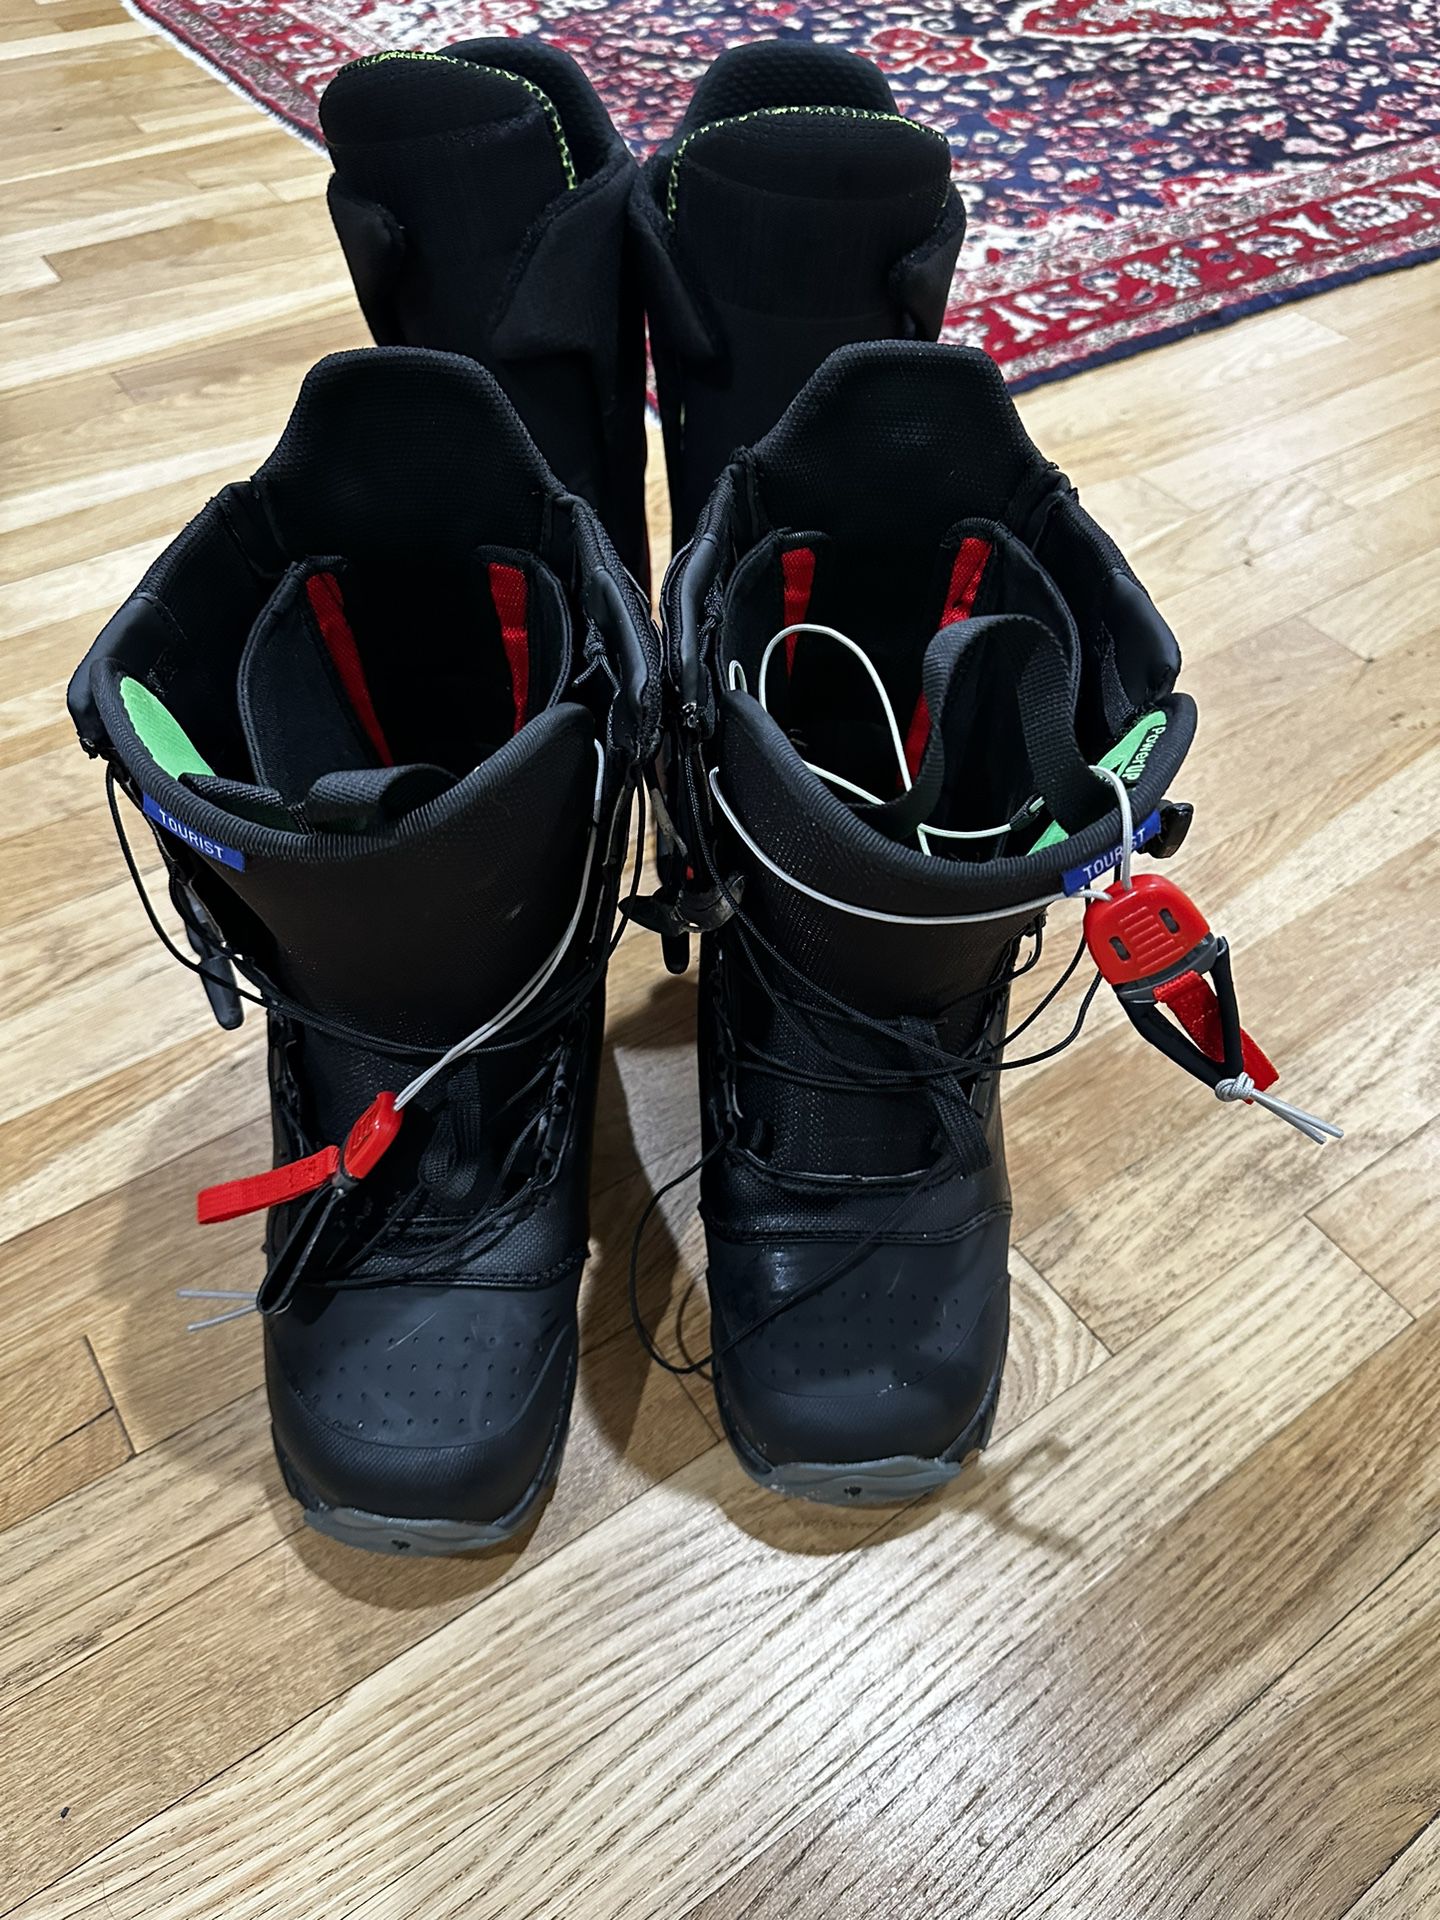 nieuwigheid Uitbreiden Tenen Burton Tourist Snowboard Boots - Size 9.5 - Worn For 4hrs Only for Sale in  Brooklyn, NY - OfferUp